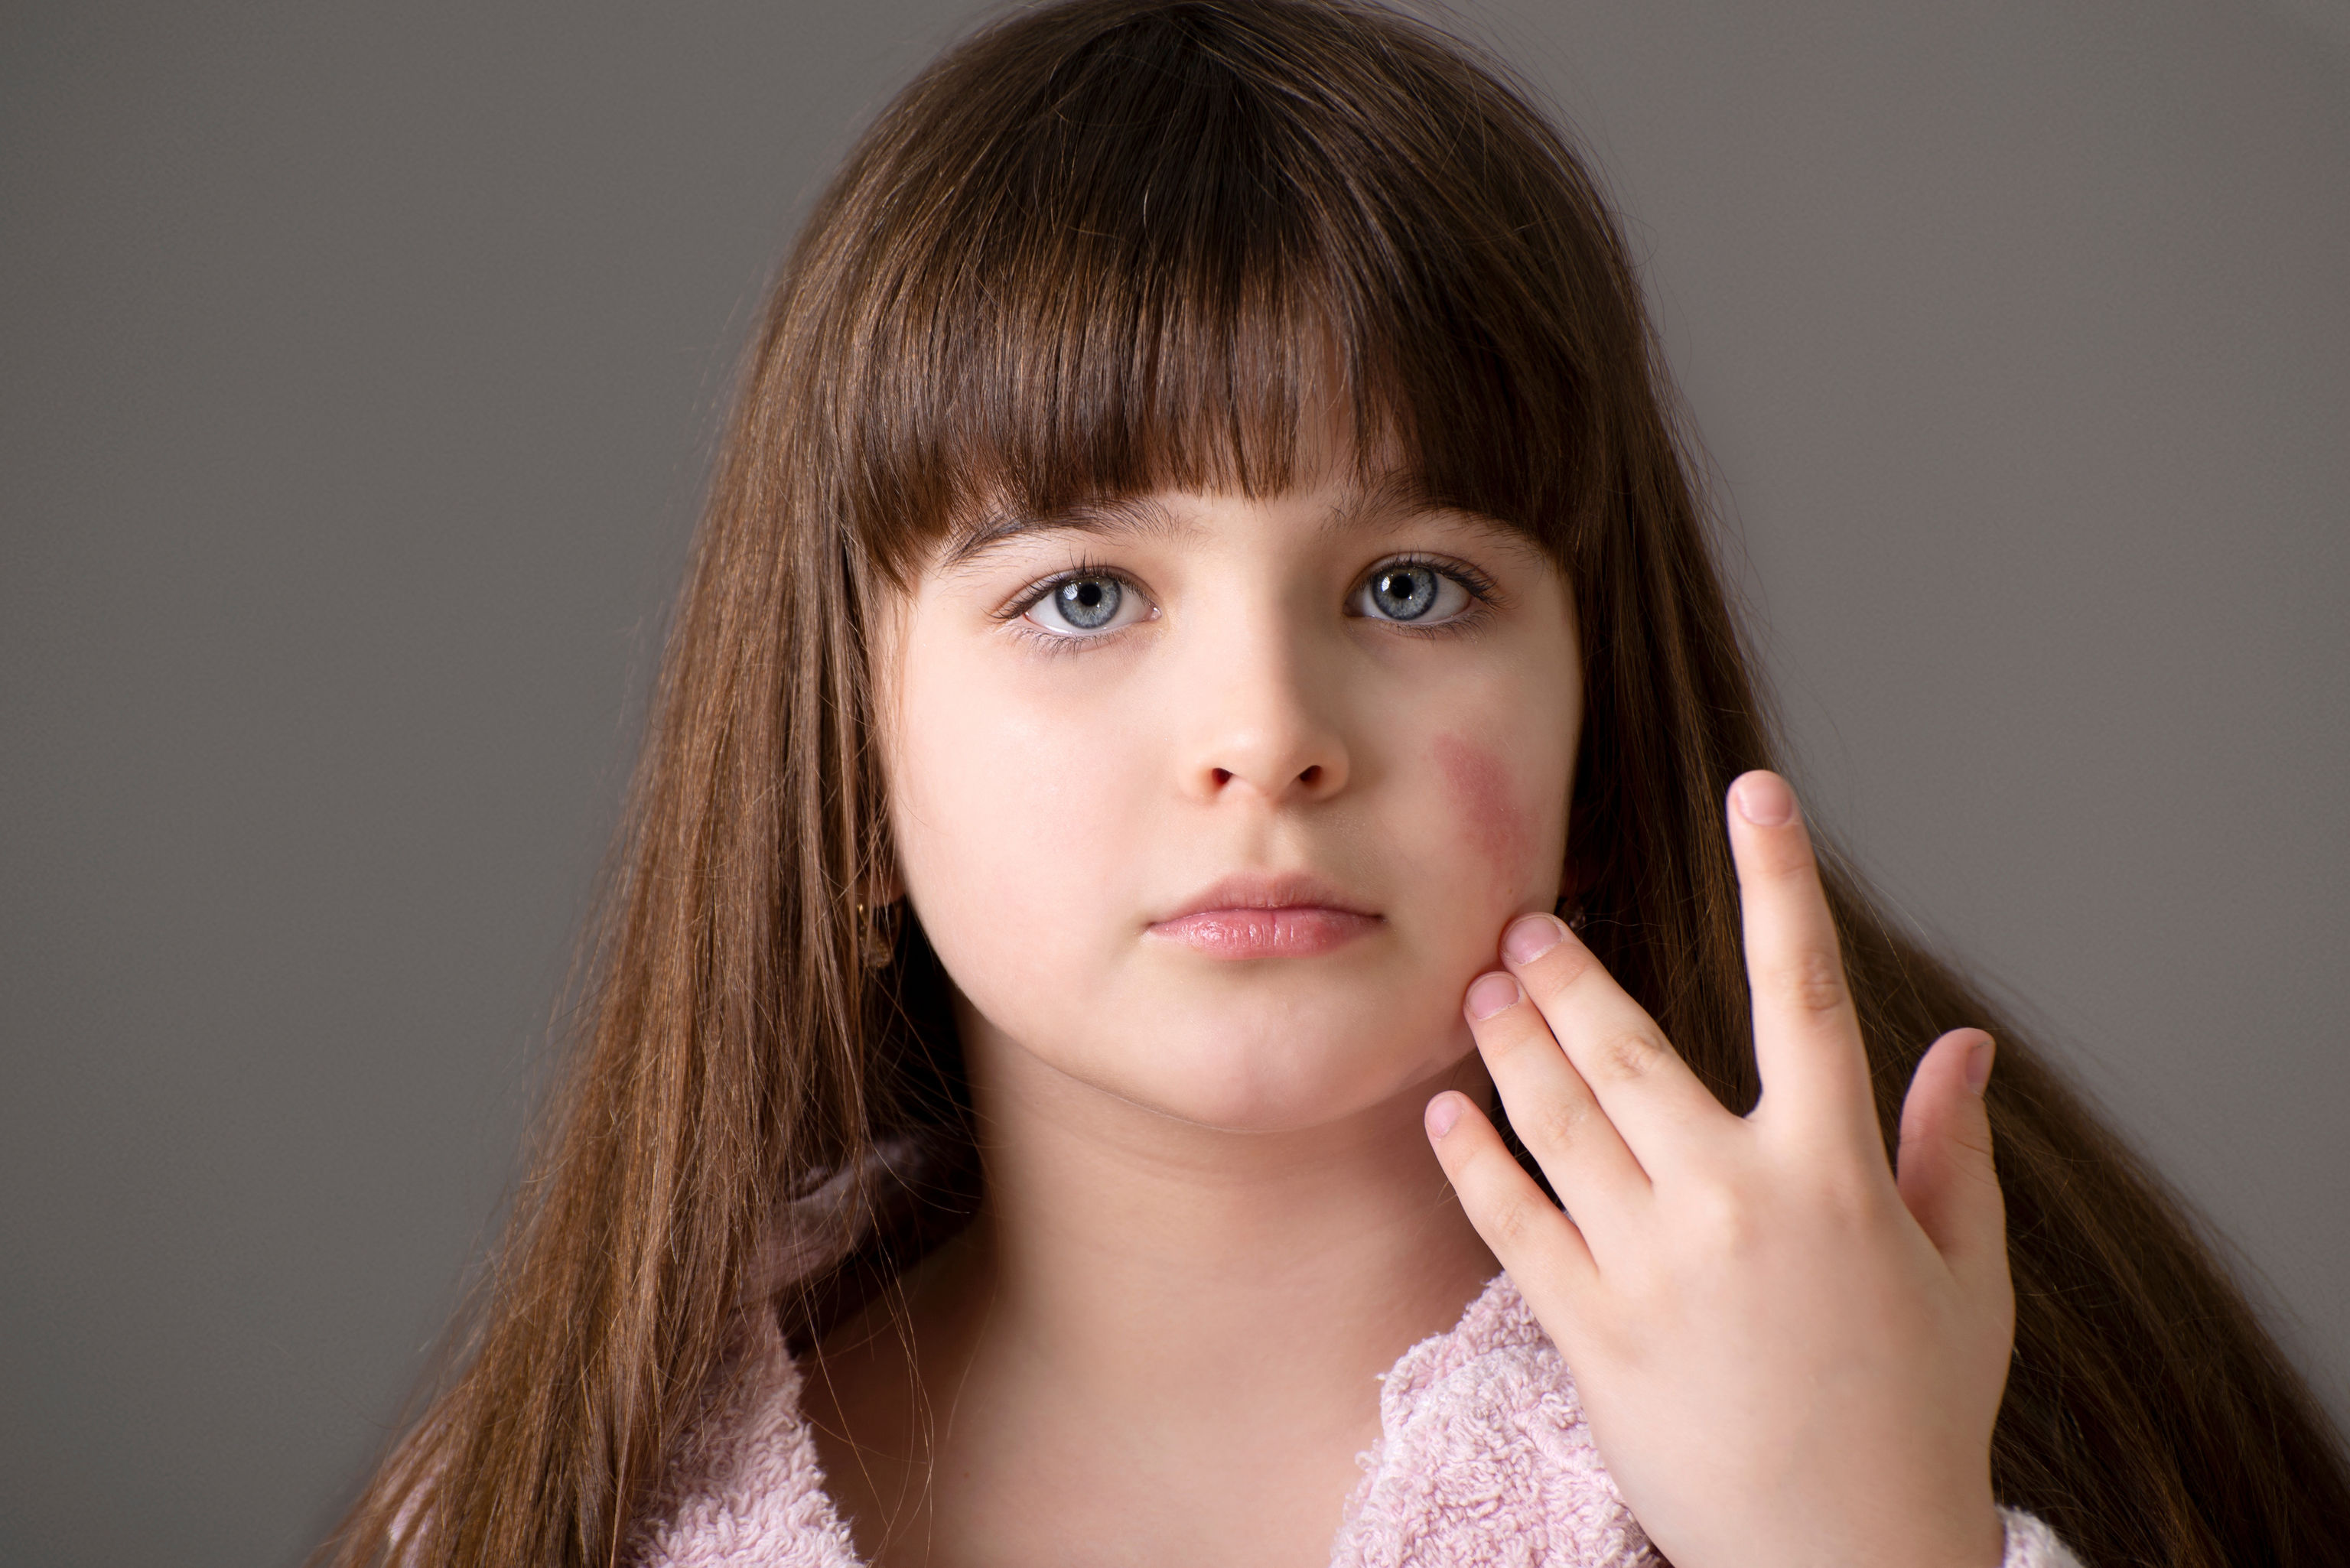 Una niña muestra un eccema facial.